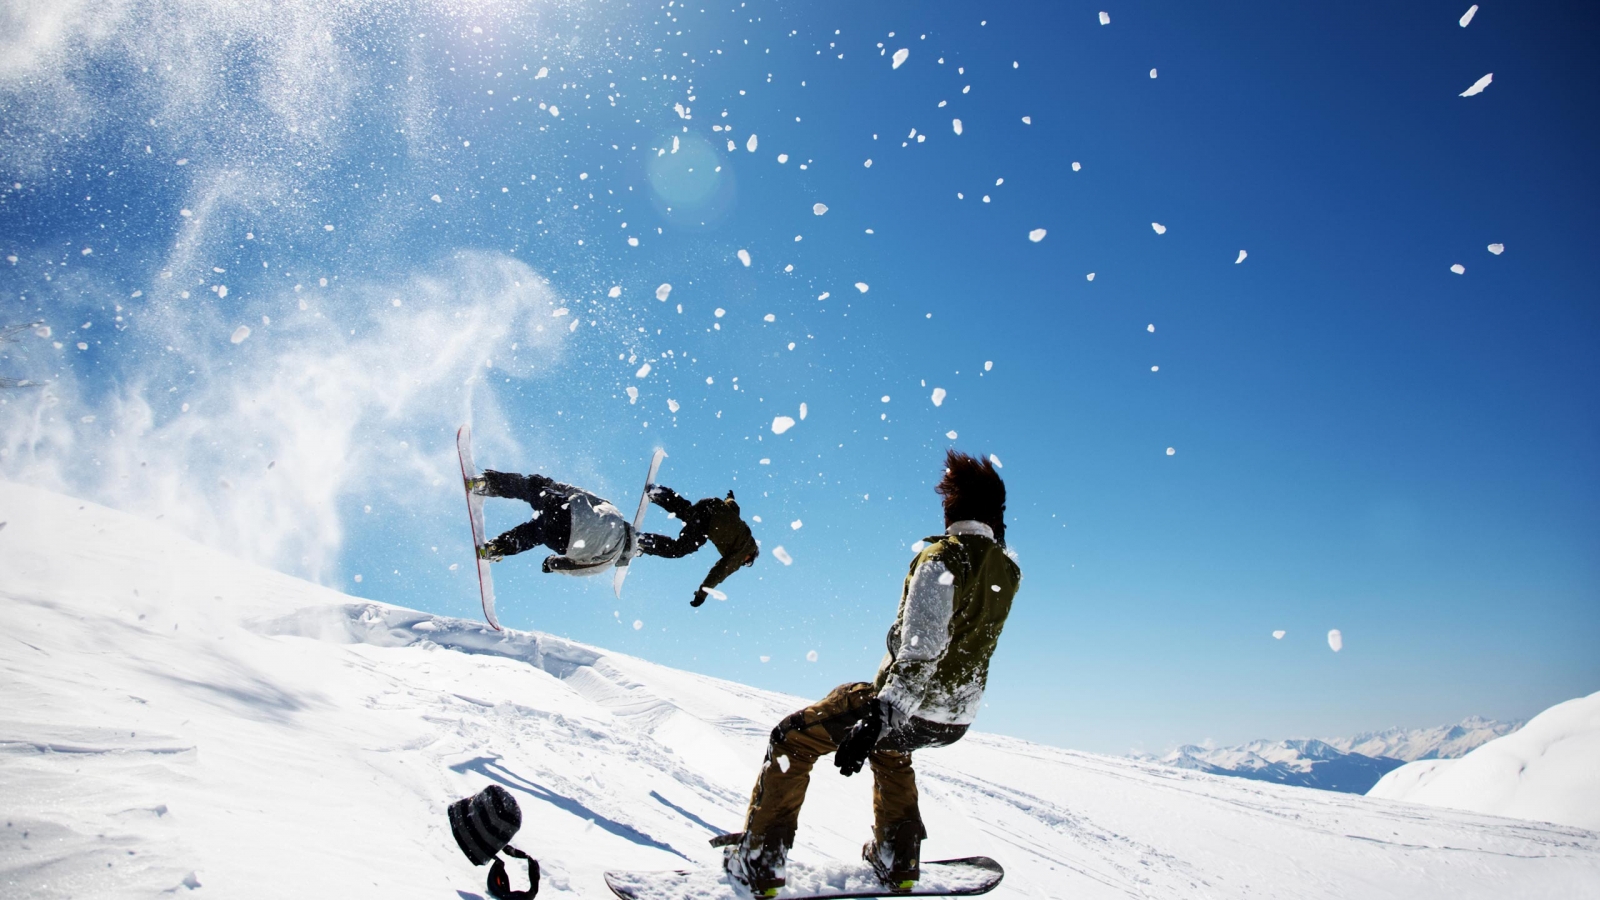 Winter Snowboarding for 1600 x 900 HDTV resolution